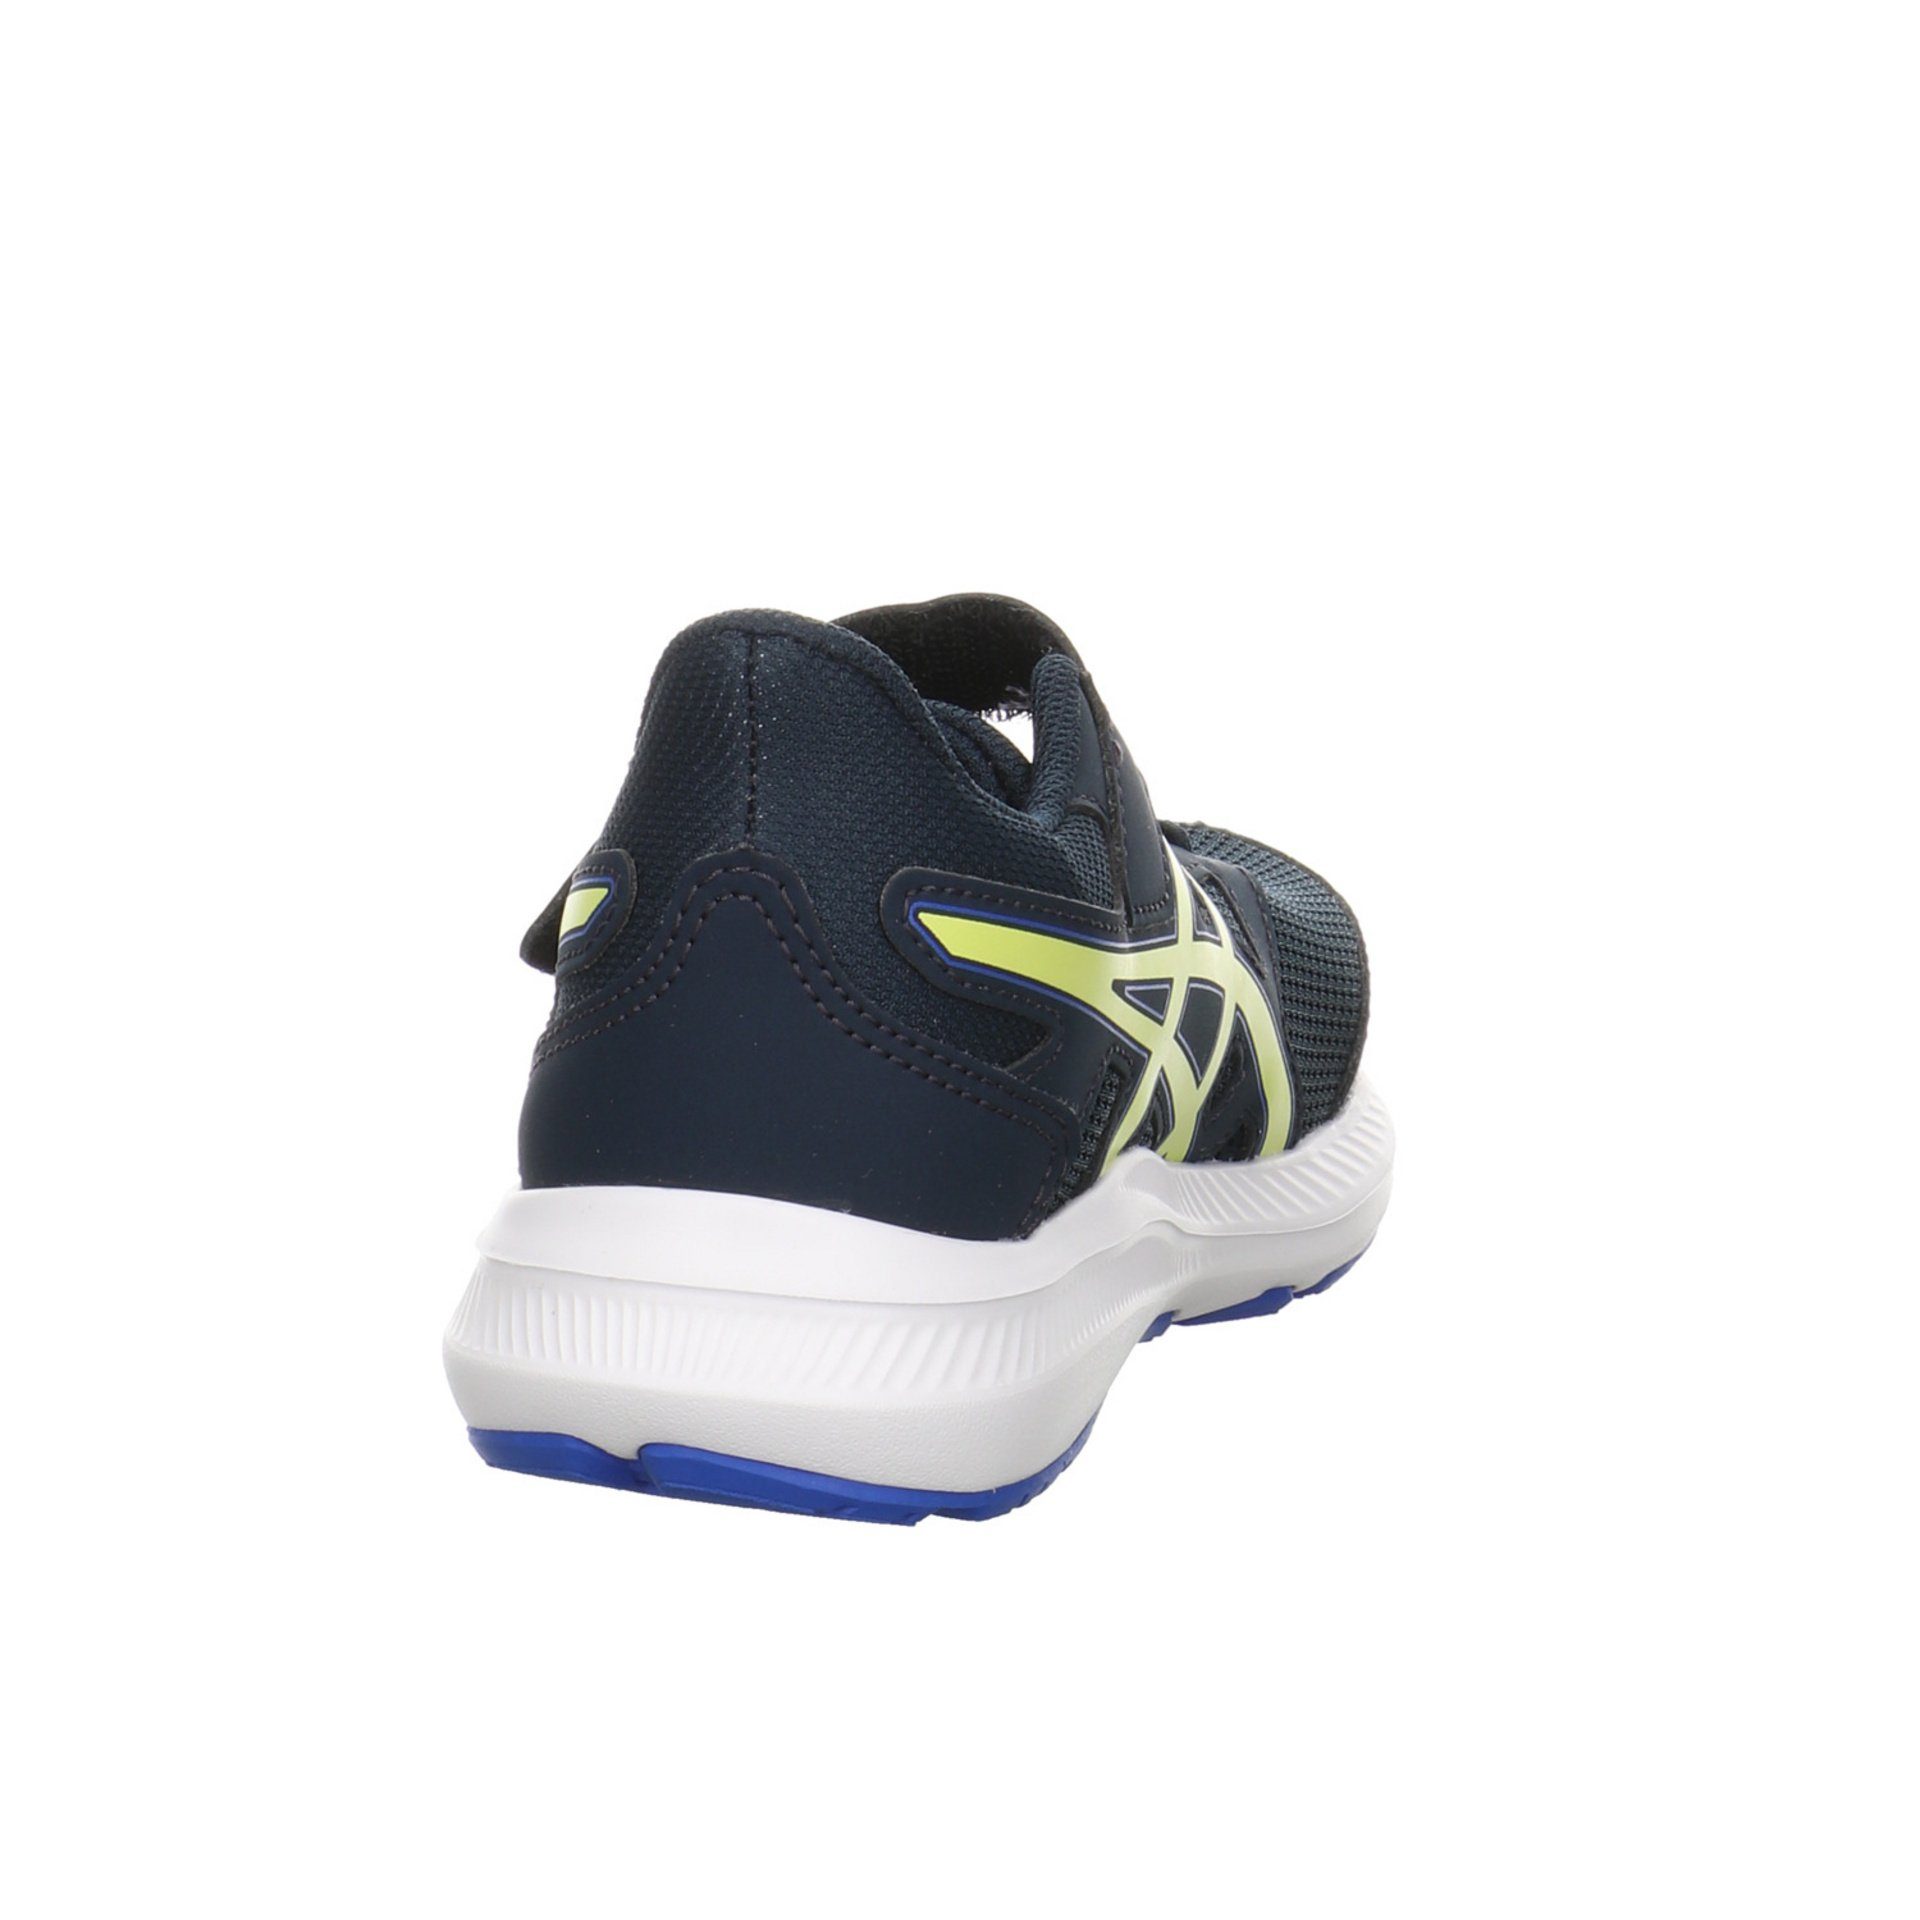 Sneaker 4 Sportschuh Schuhe Asics Sneaker BLUE/GLOW Synthetikkombination Jolt PS YEL Mädchen FRENCH